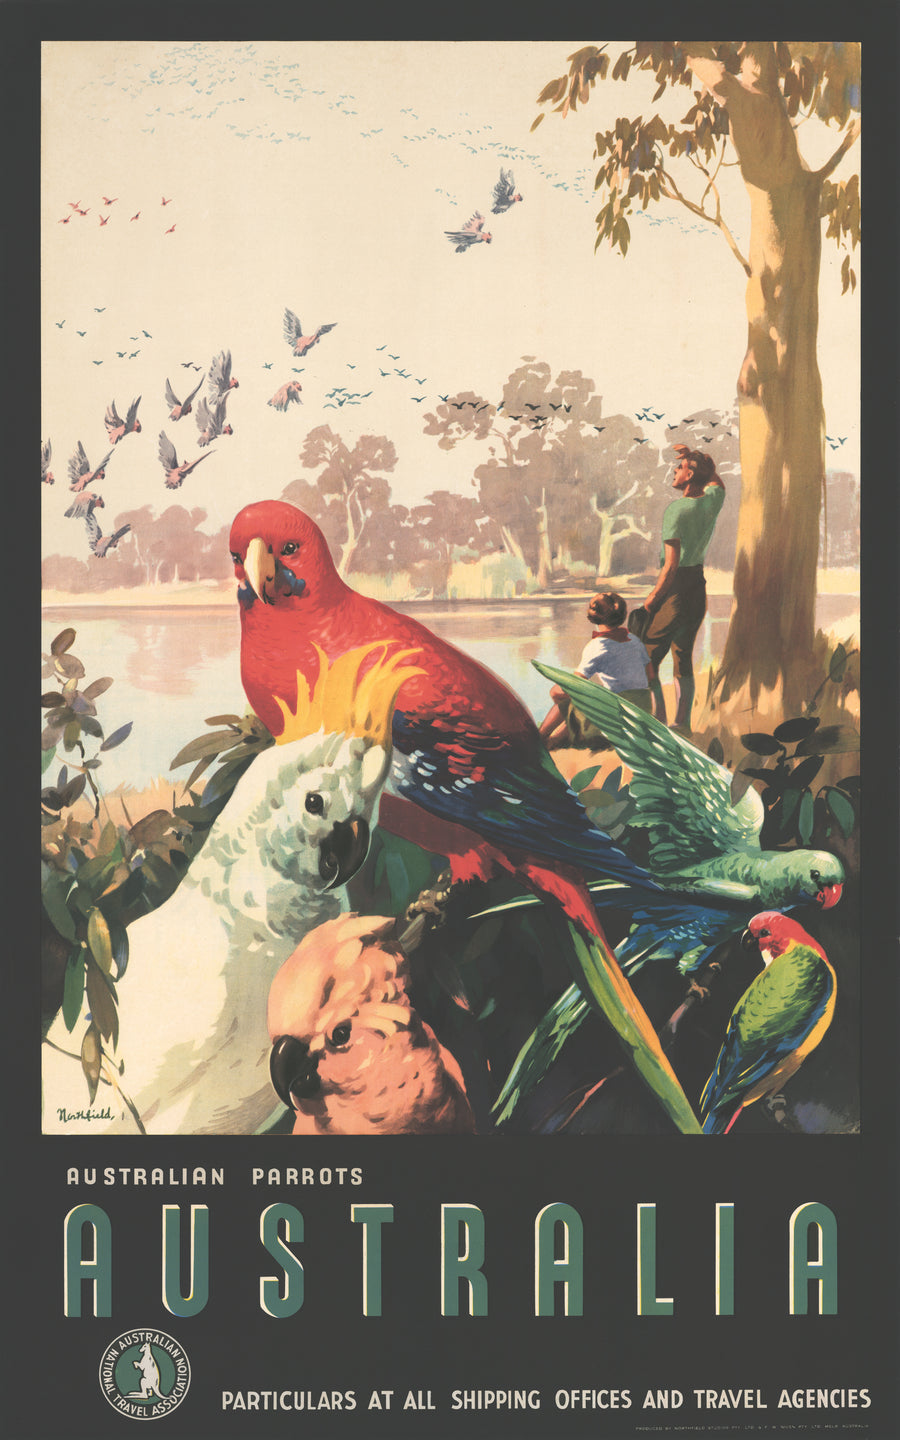 Vintage Travel Poster I Australia: Australian Parrots by: James Northfield